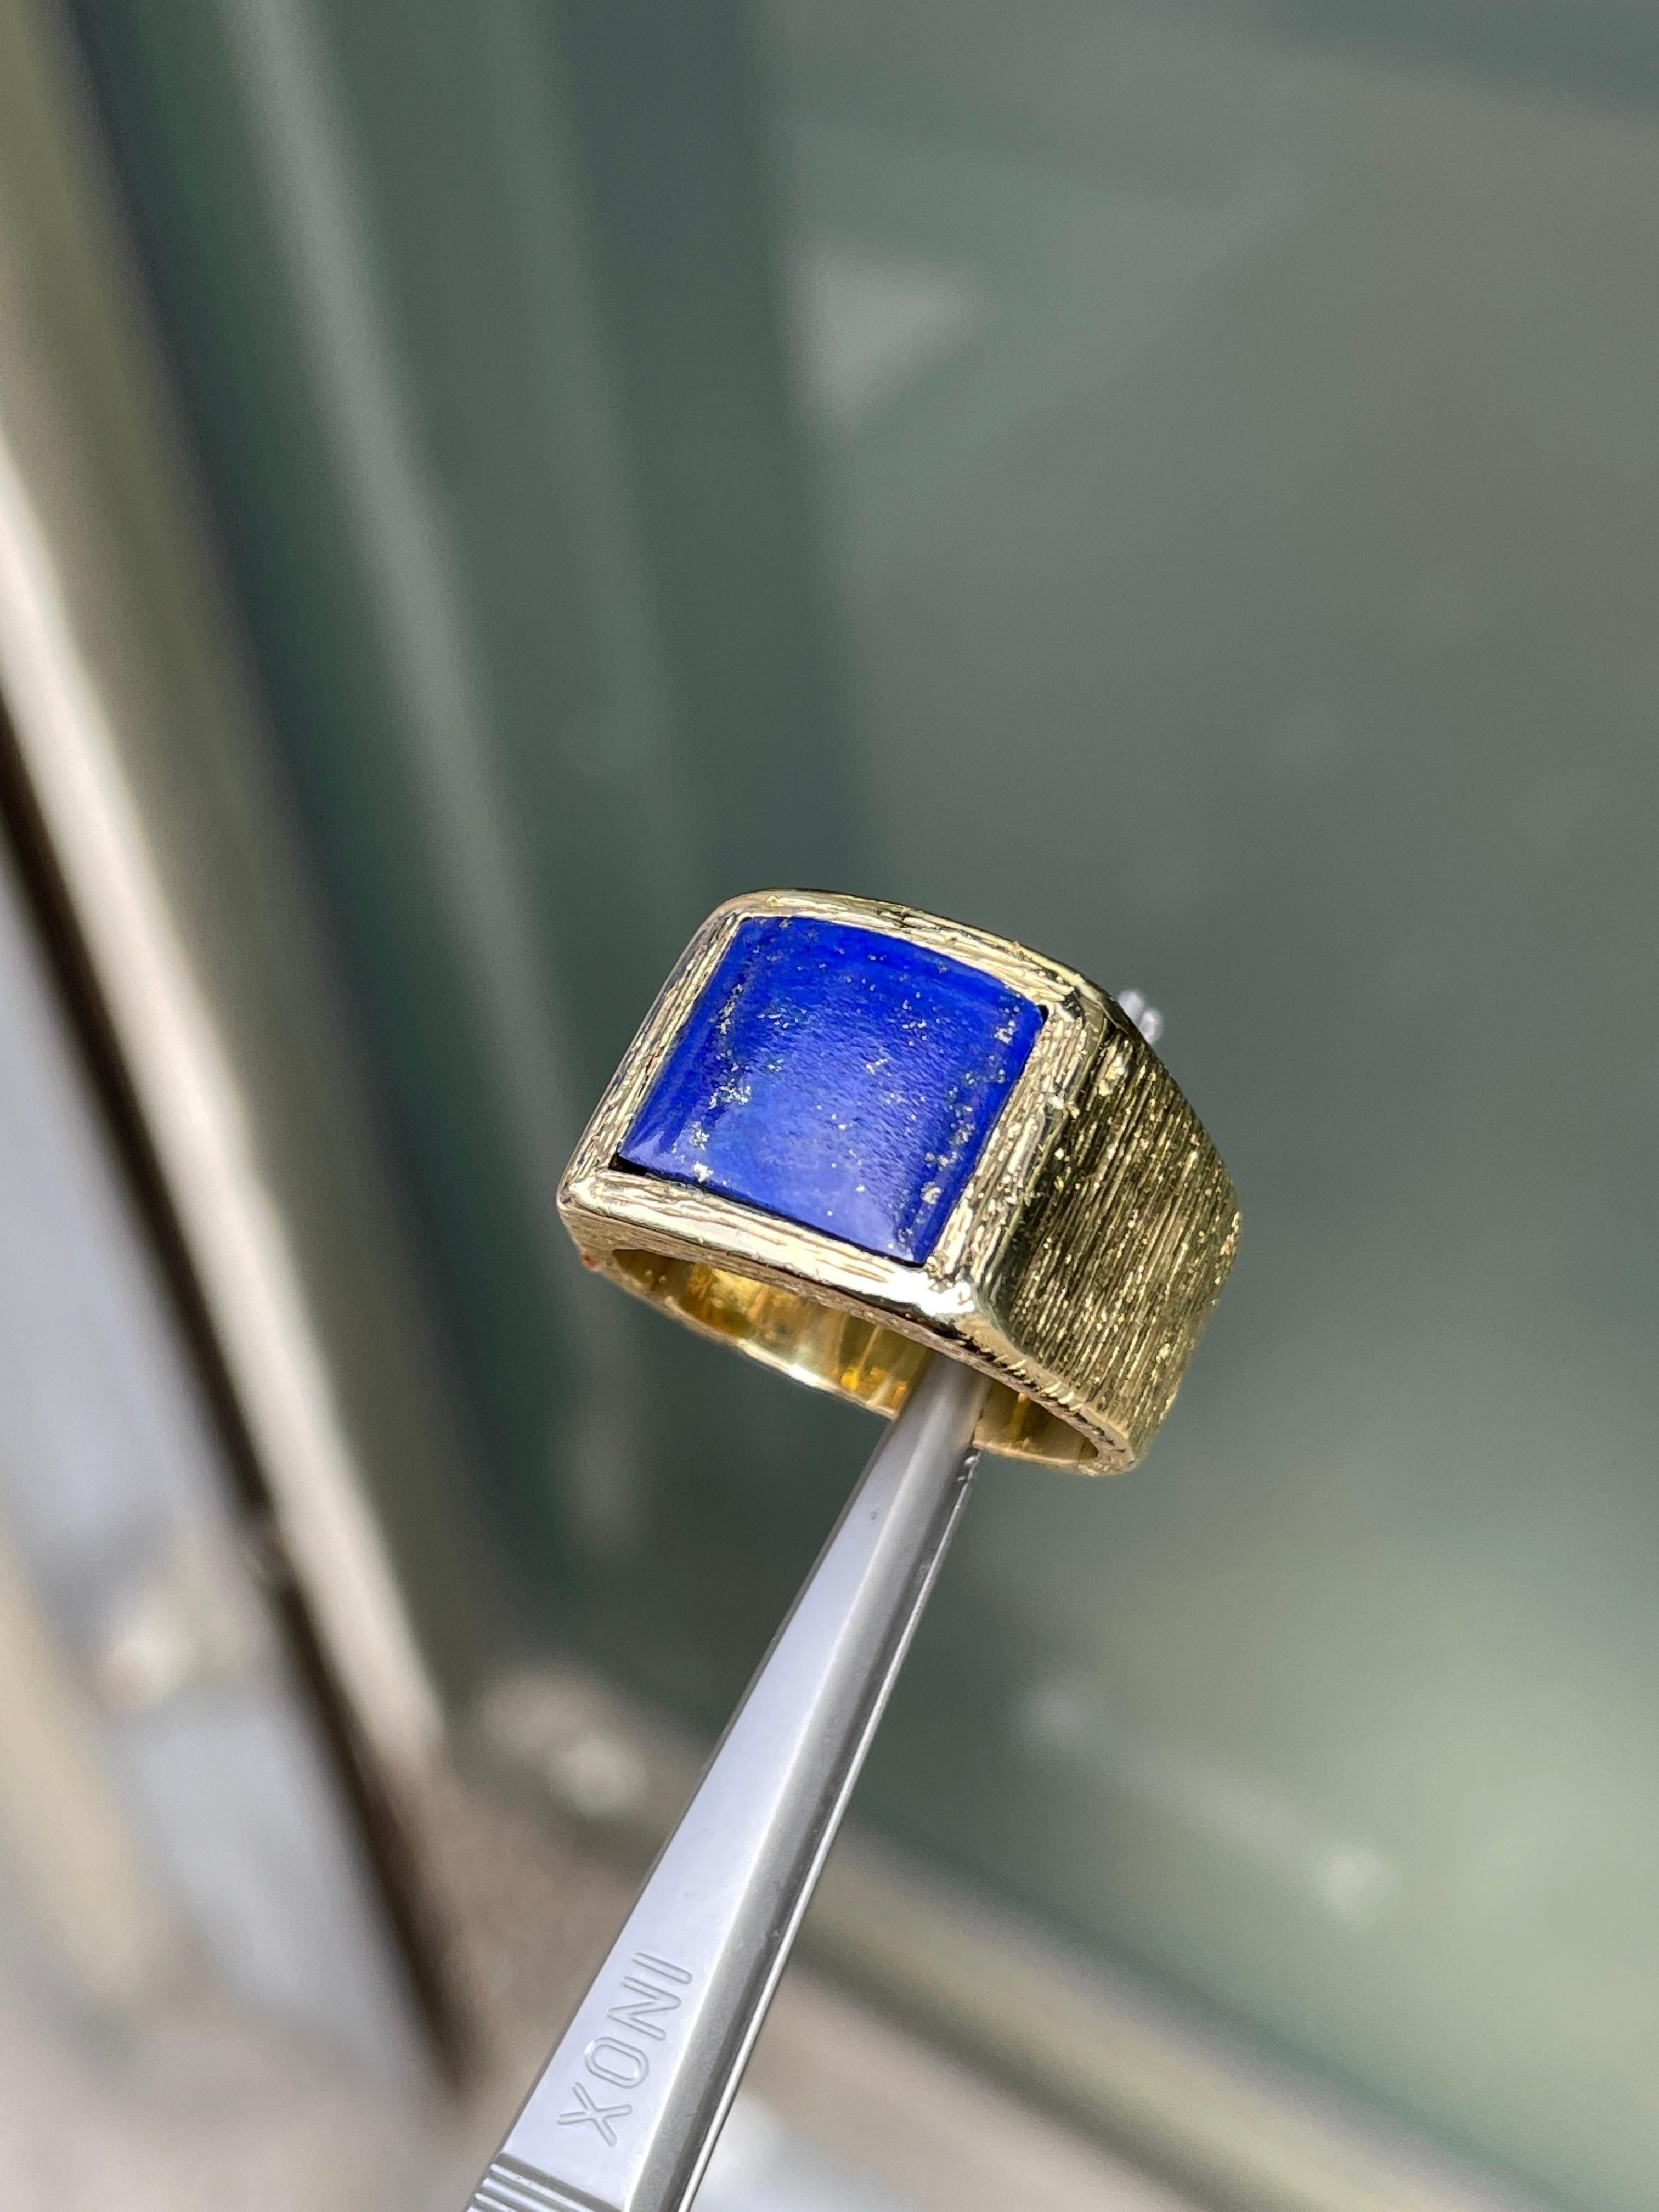 Kutchinsky Lapis Lazuli 18 Carat Yellow Gold Textured Signet Ring, 1976 For Sale 1